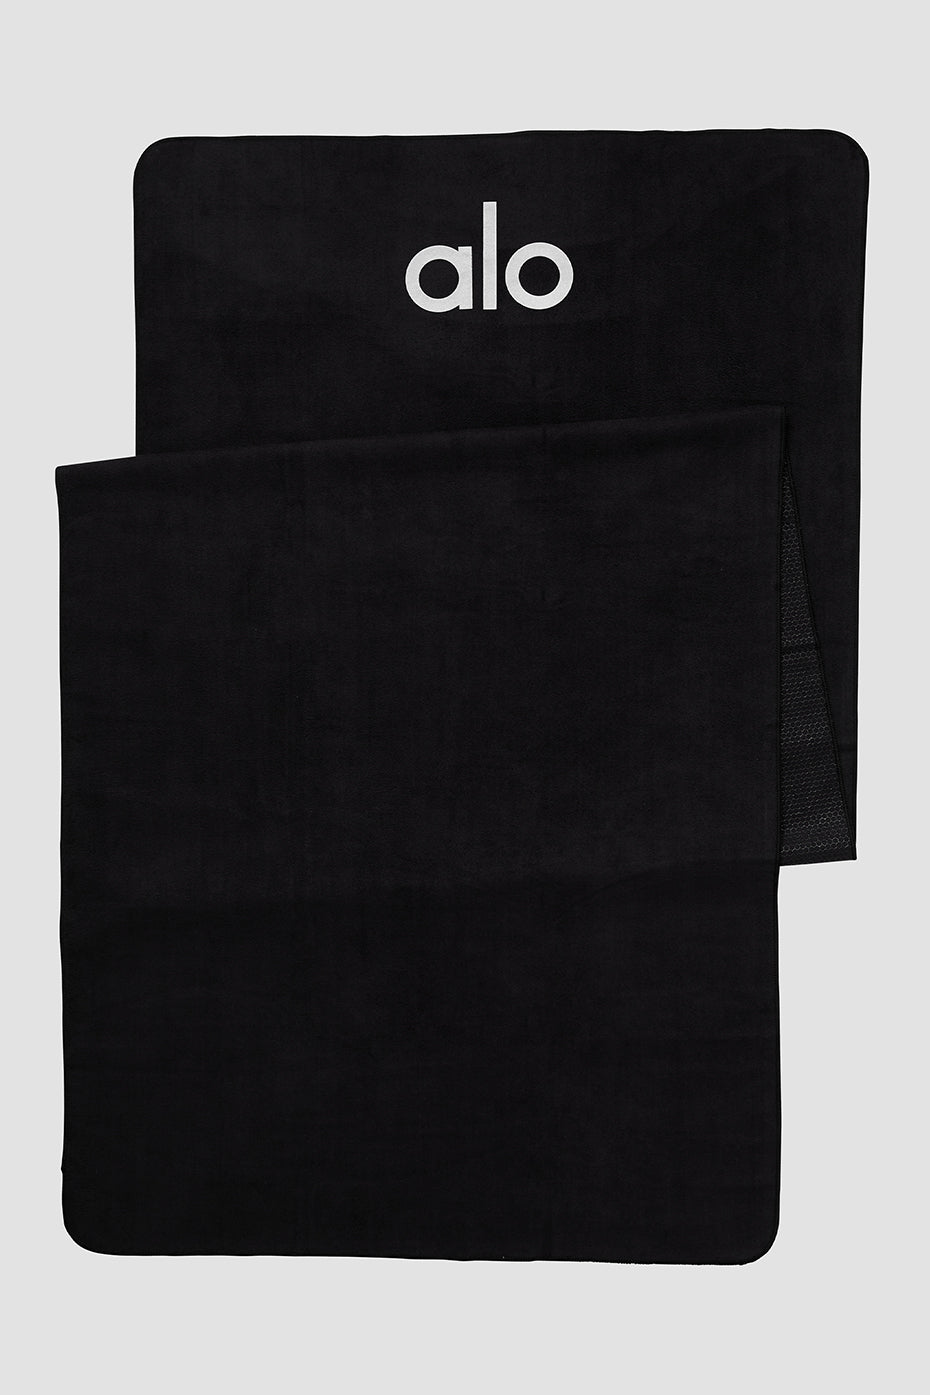 Performance No Sweat Hand Towel in Smoky Quartz by Alo Yoga